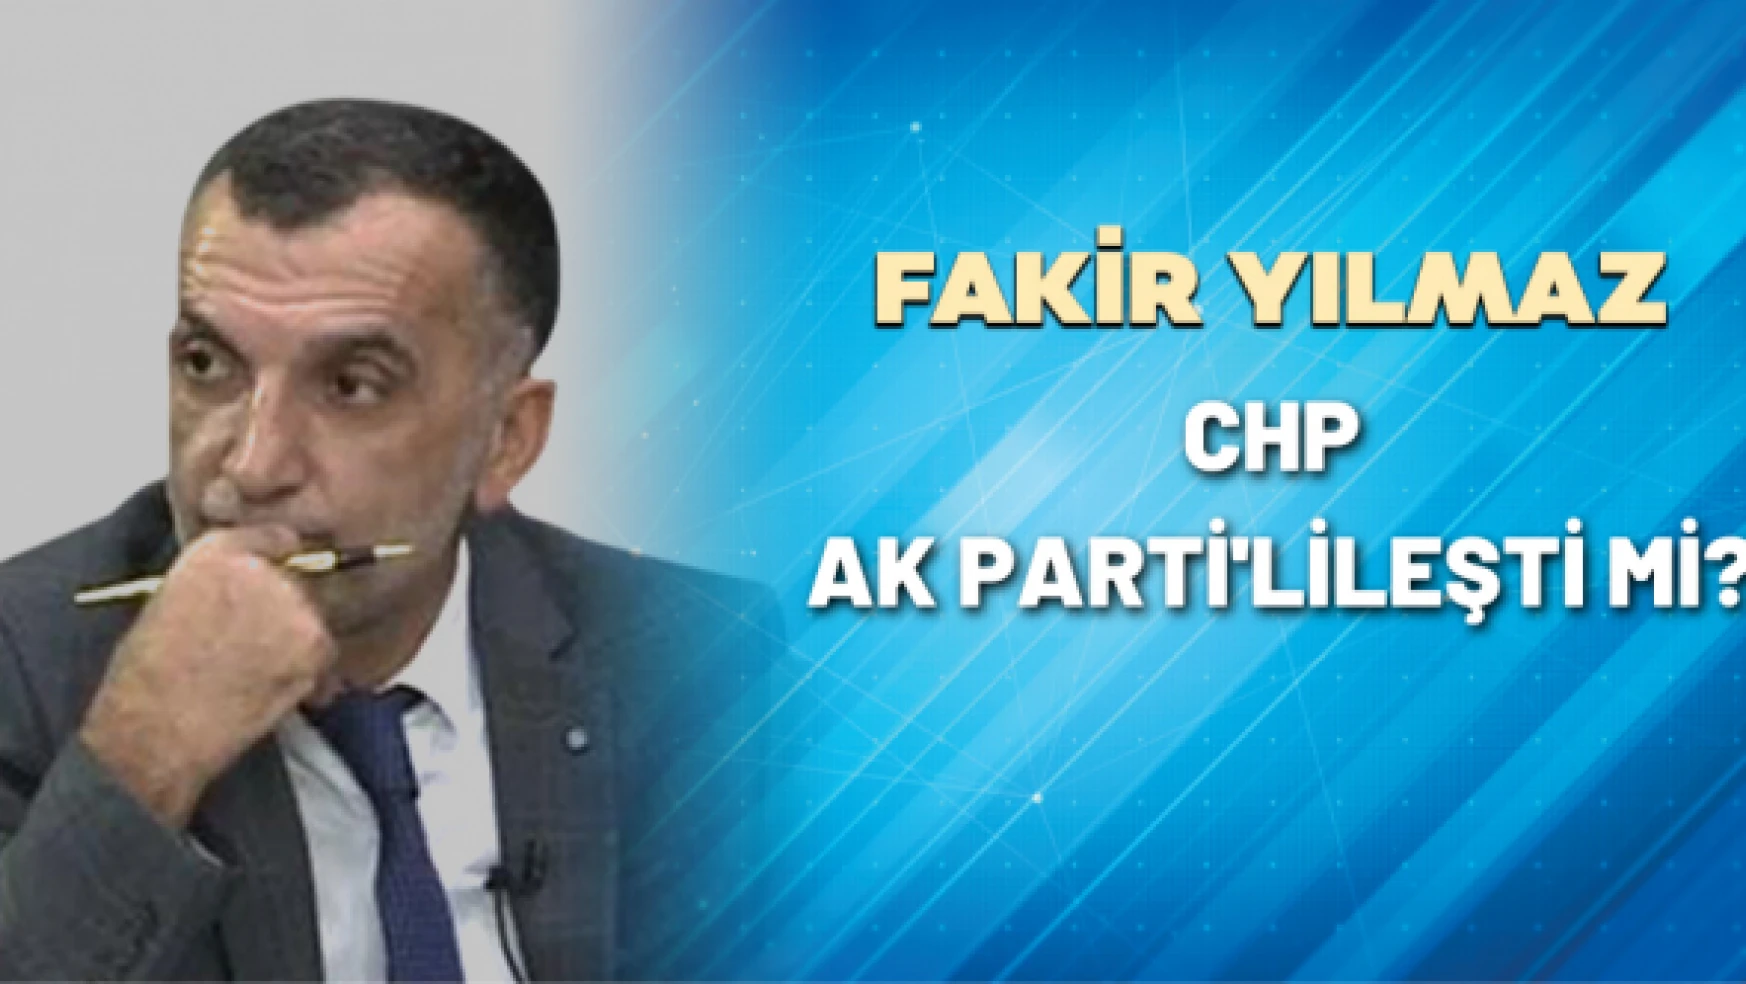 Gazeteci Fakir Yılmaz yazdı: CHP AK Parti'lileşti mi?